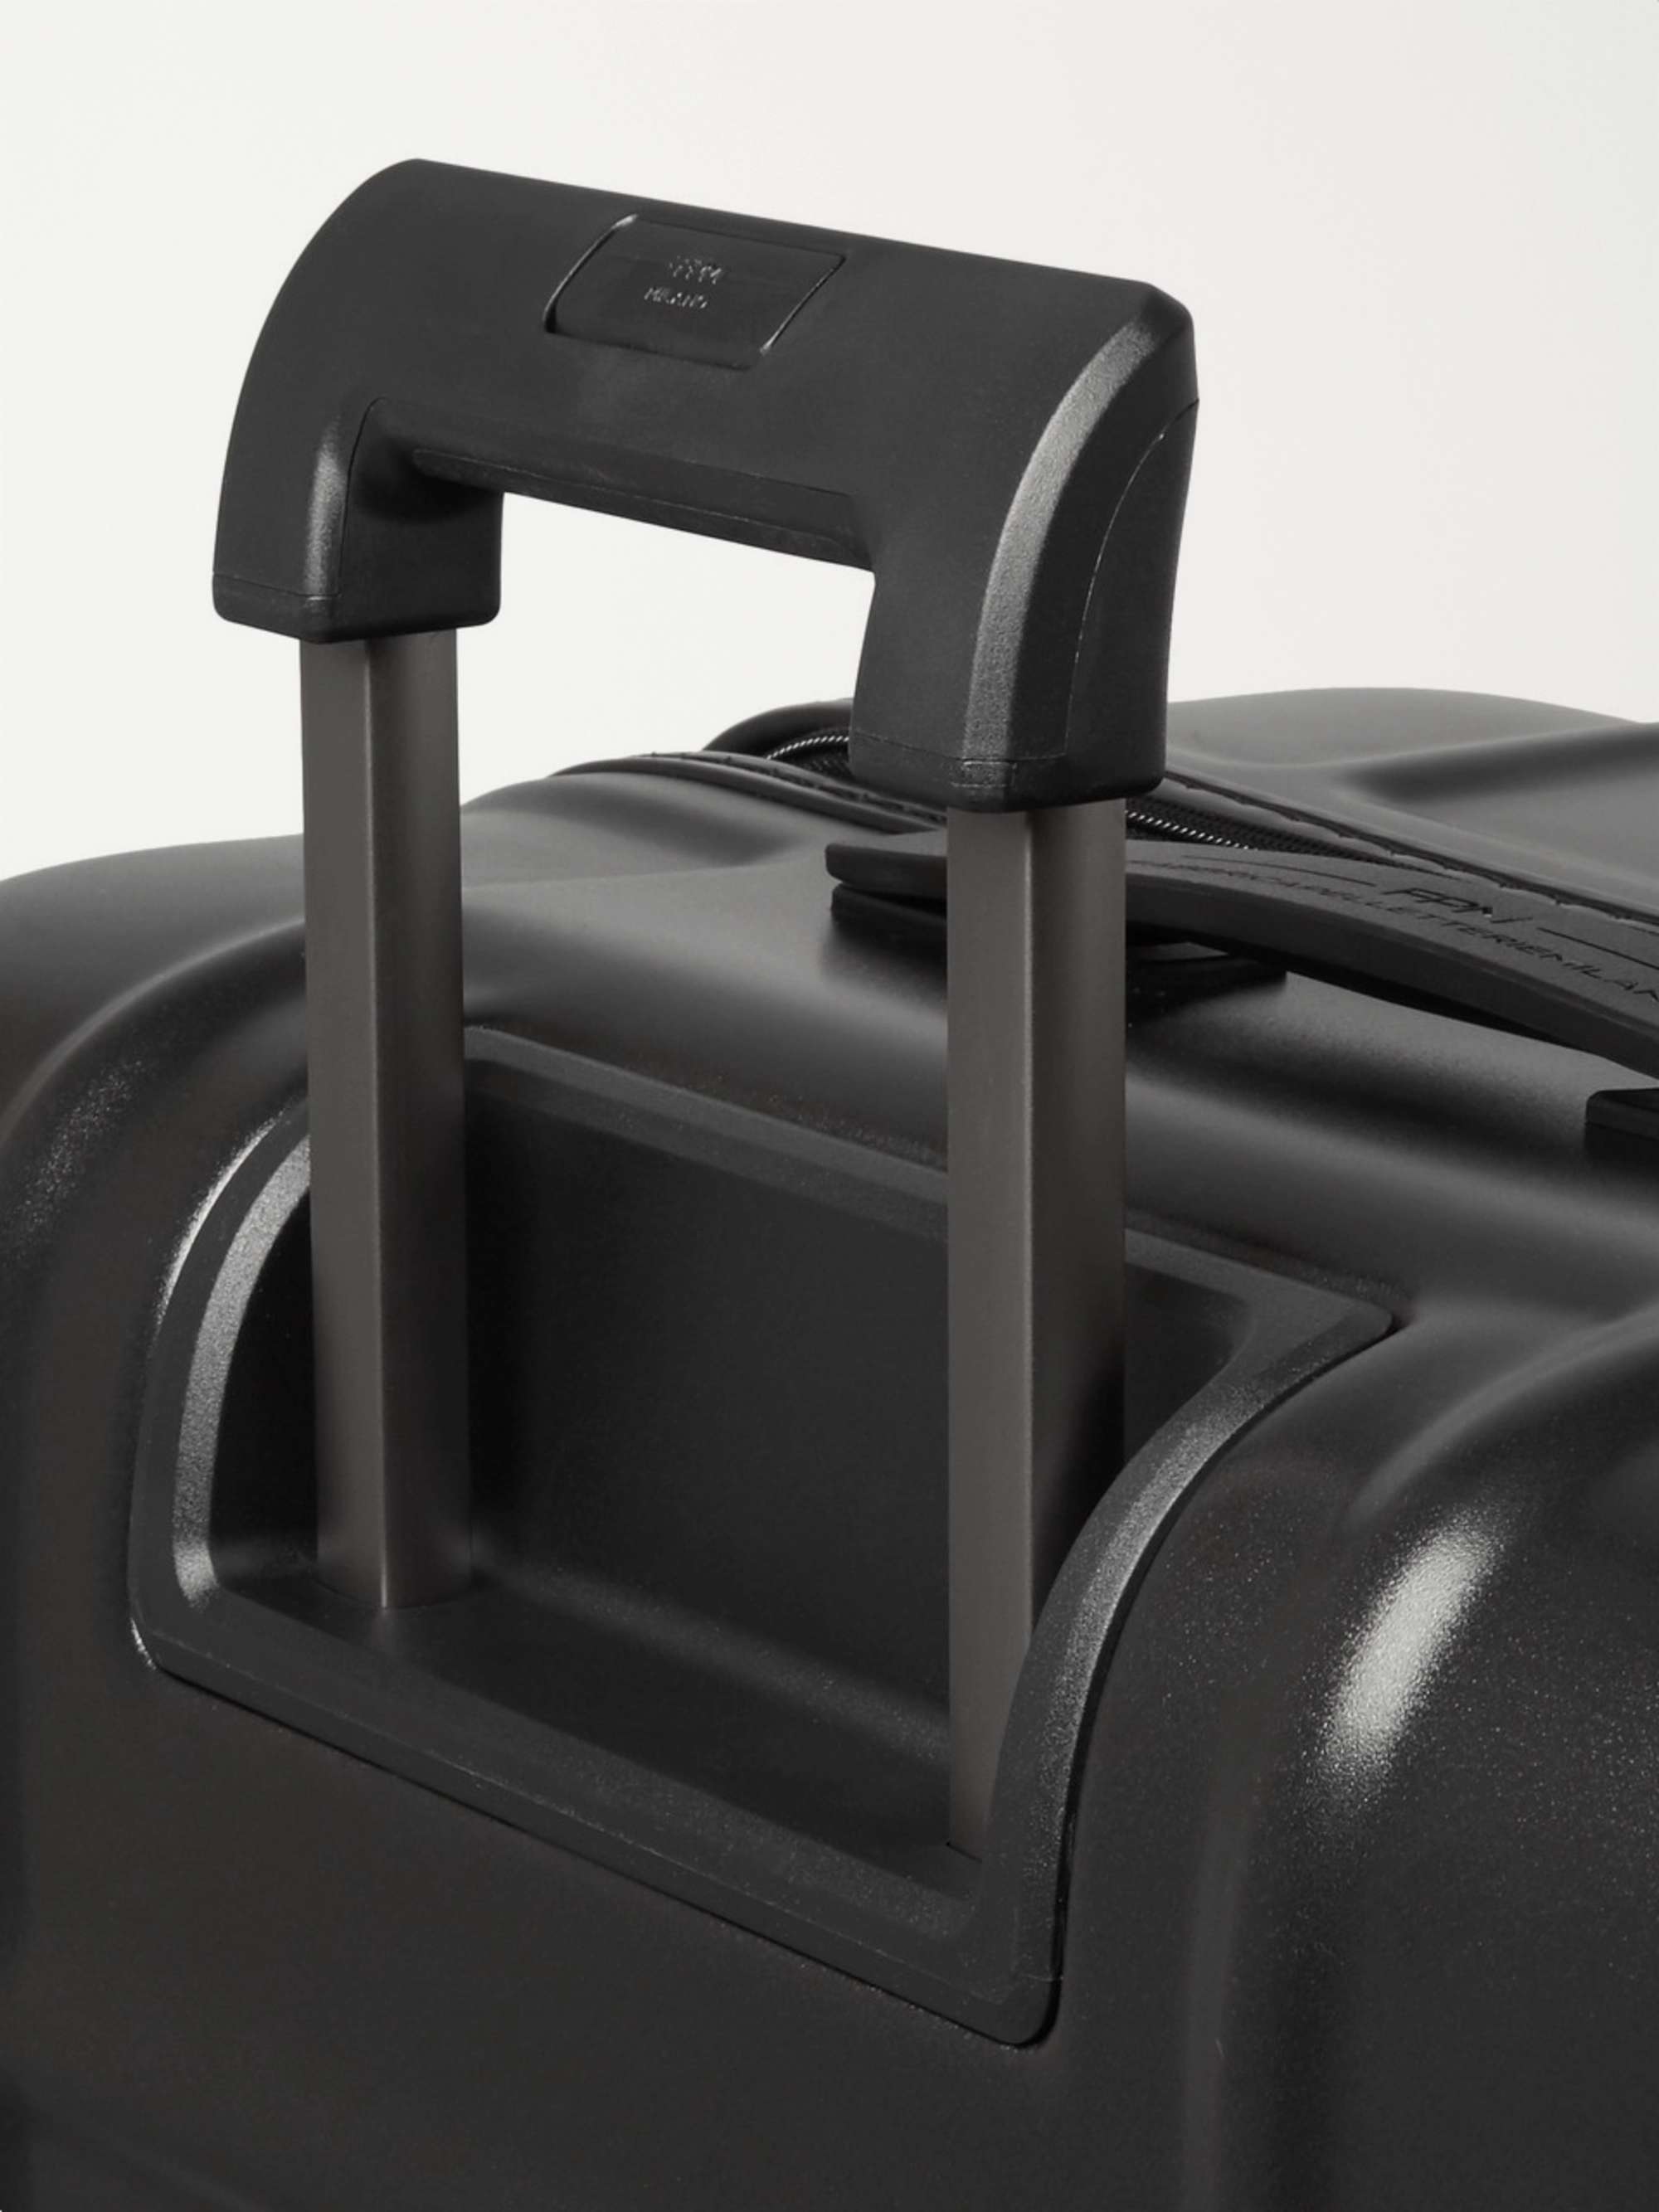 FPM MILANO Globe Spinner 76cm Polycarbonate Suitcase